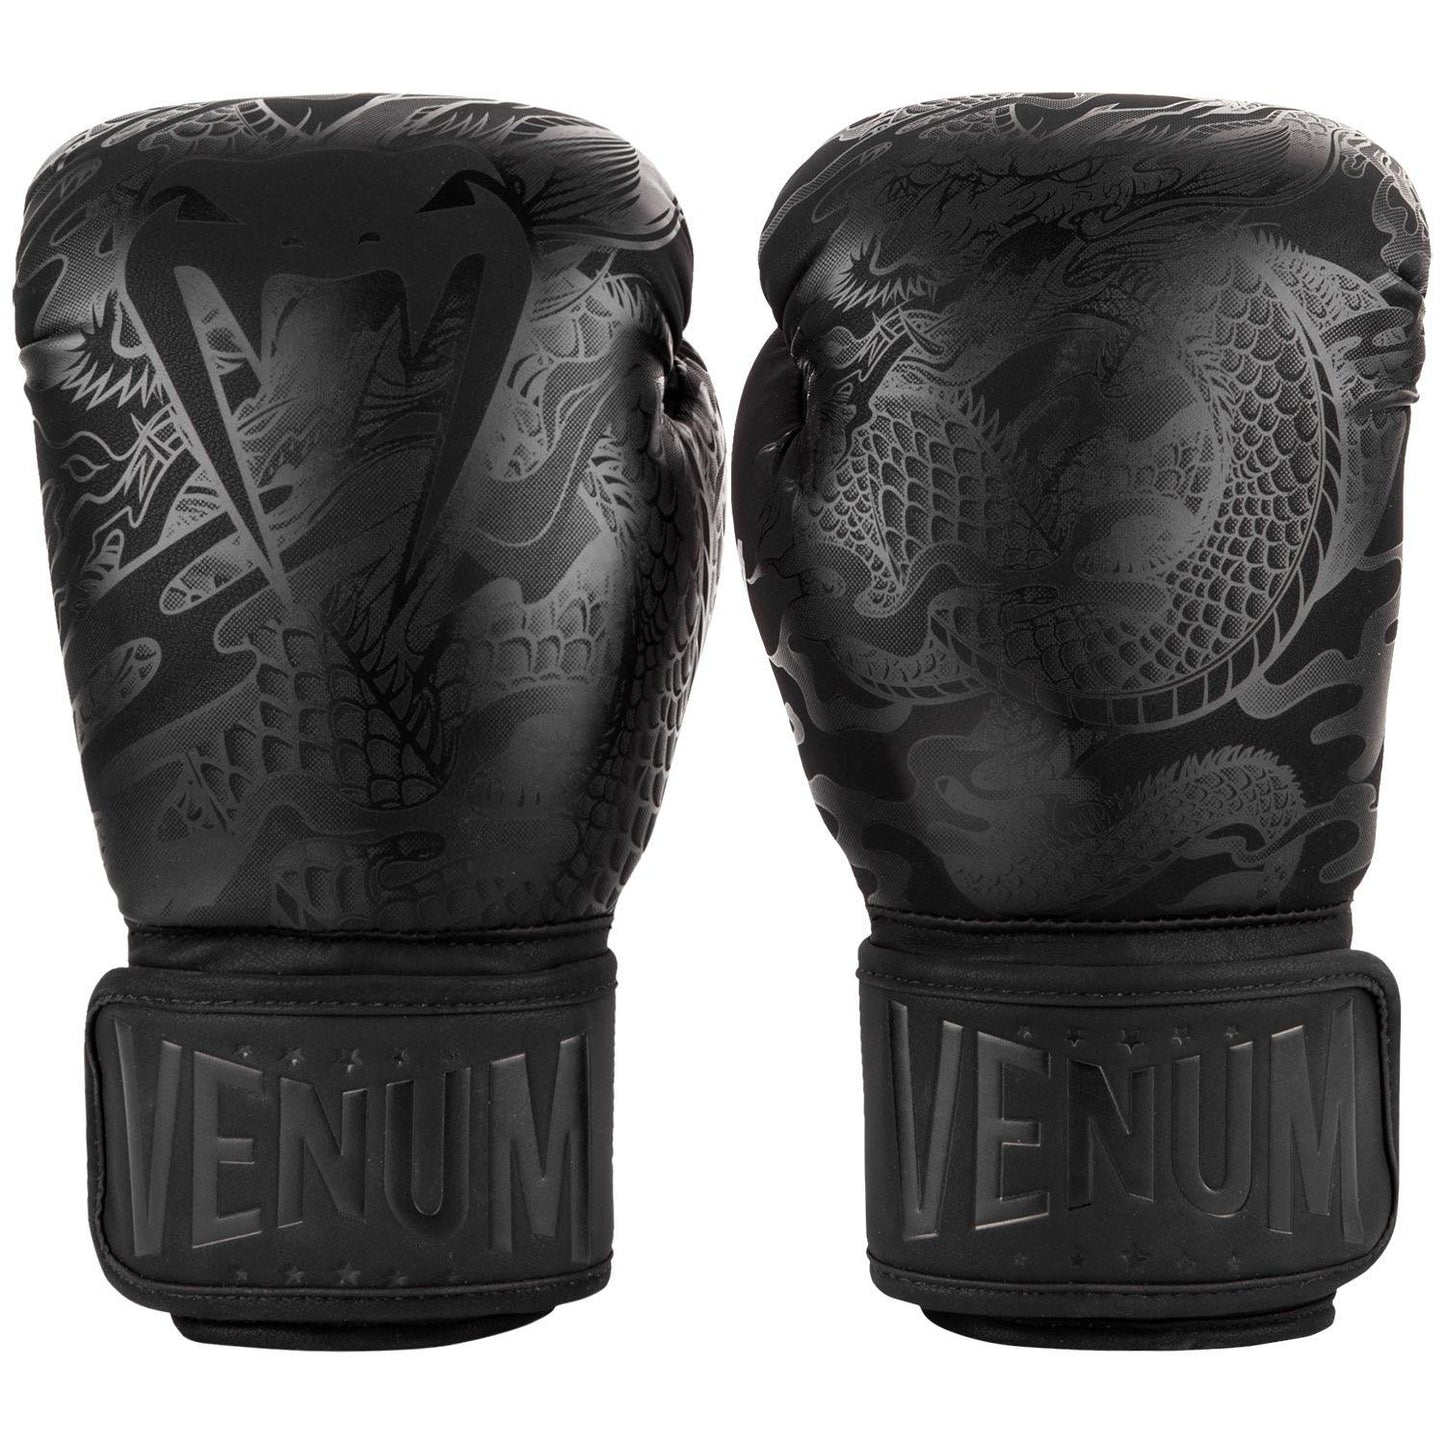 Venum Dragon's Flight Boxing Gloves - Black/Black Picture 1